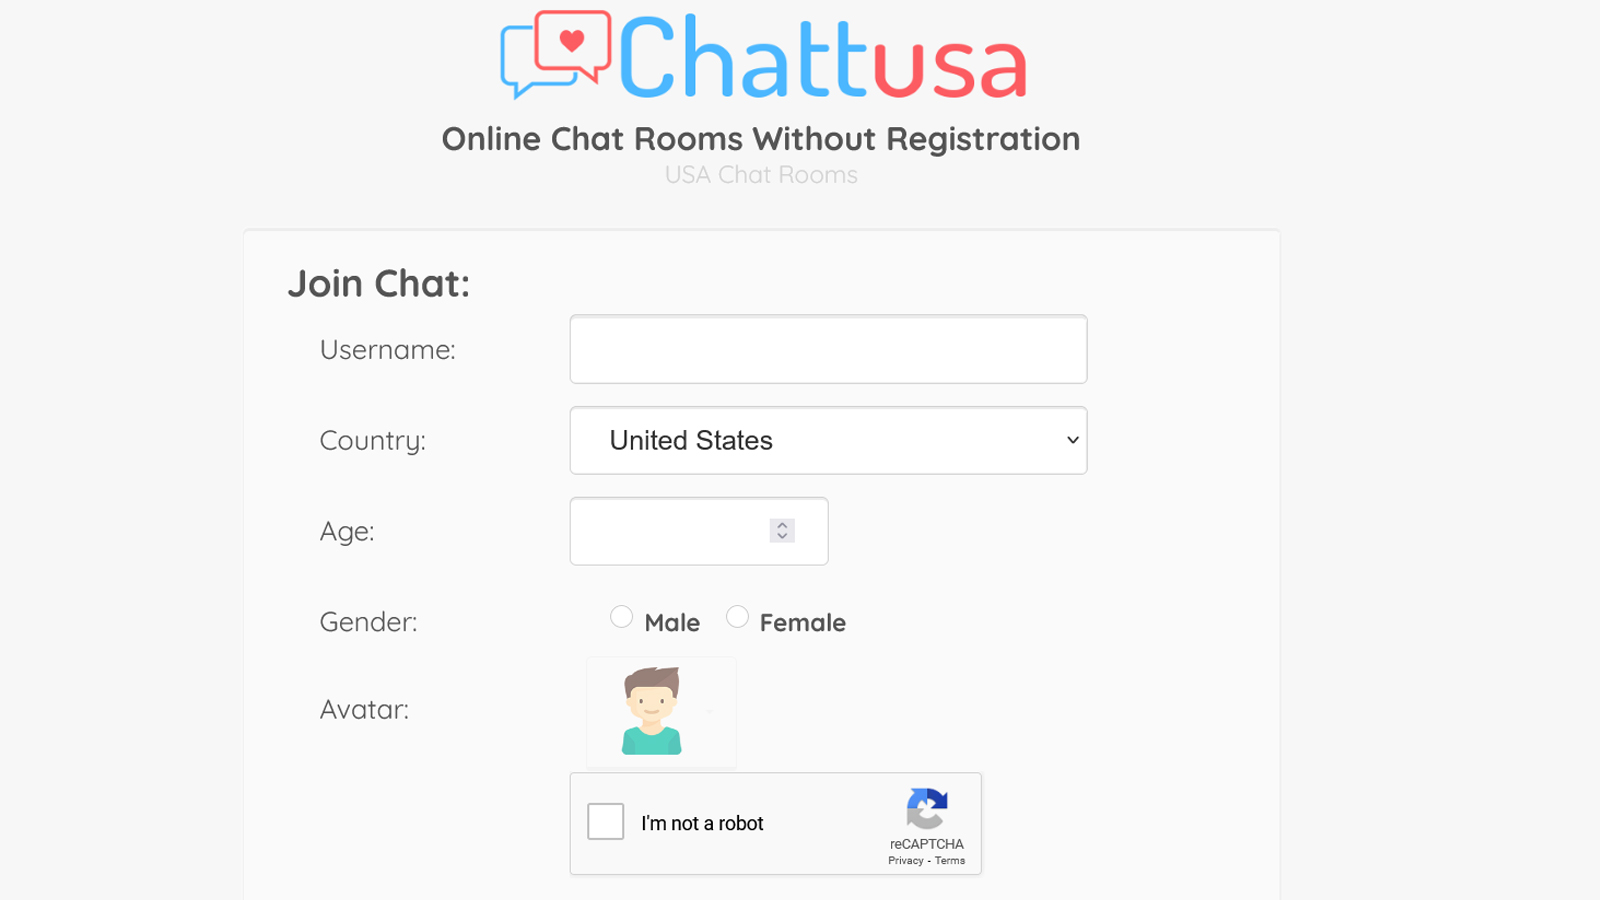 Find detailed information about Chattusa